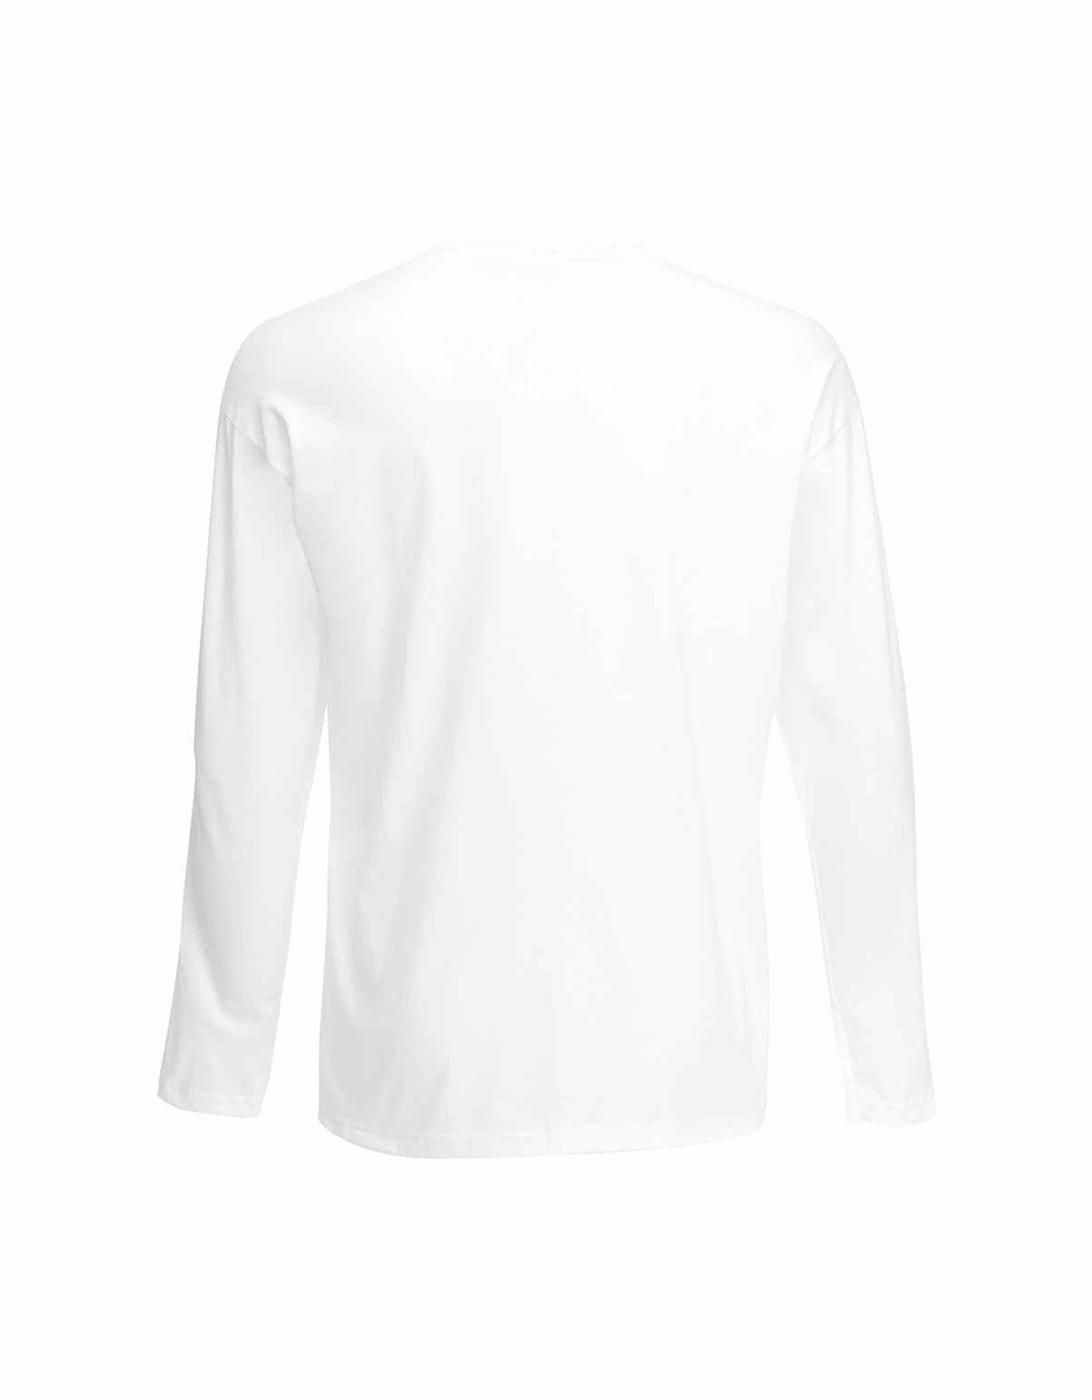 Unisex Adult Value Long-Sleeved T-Shirt